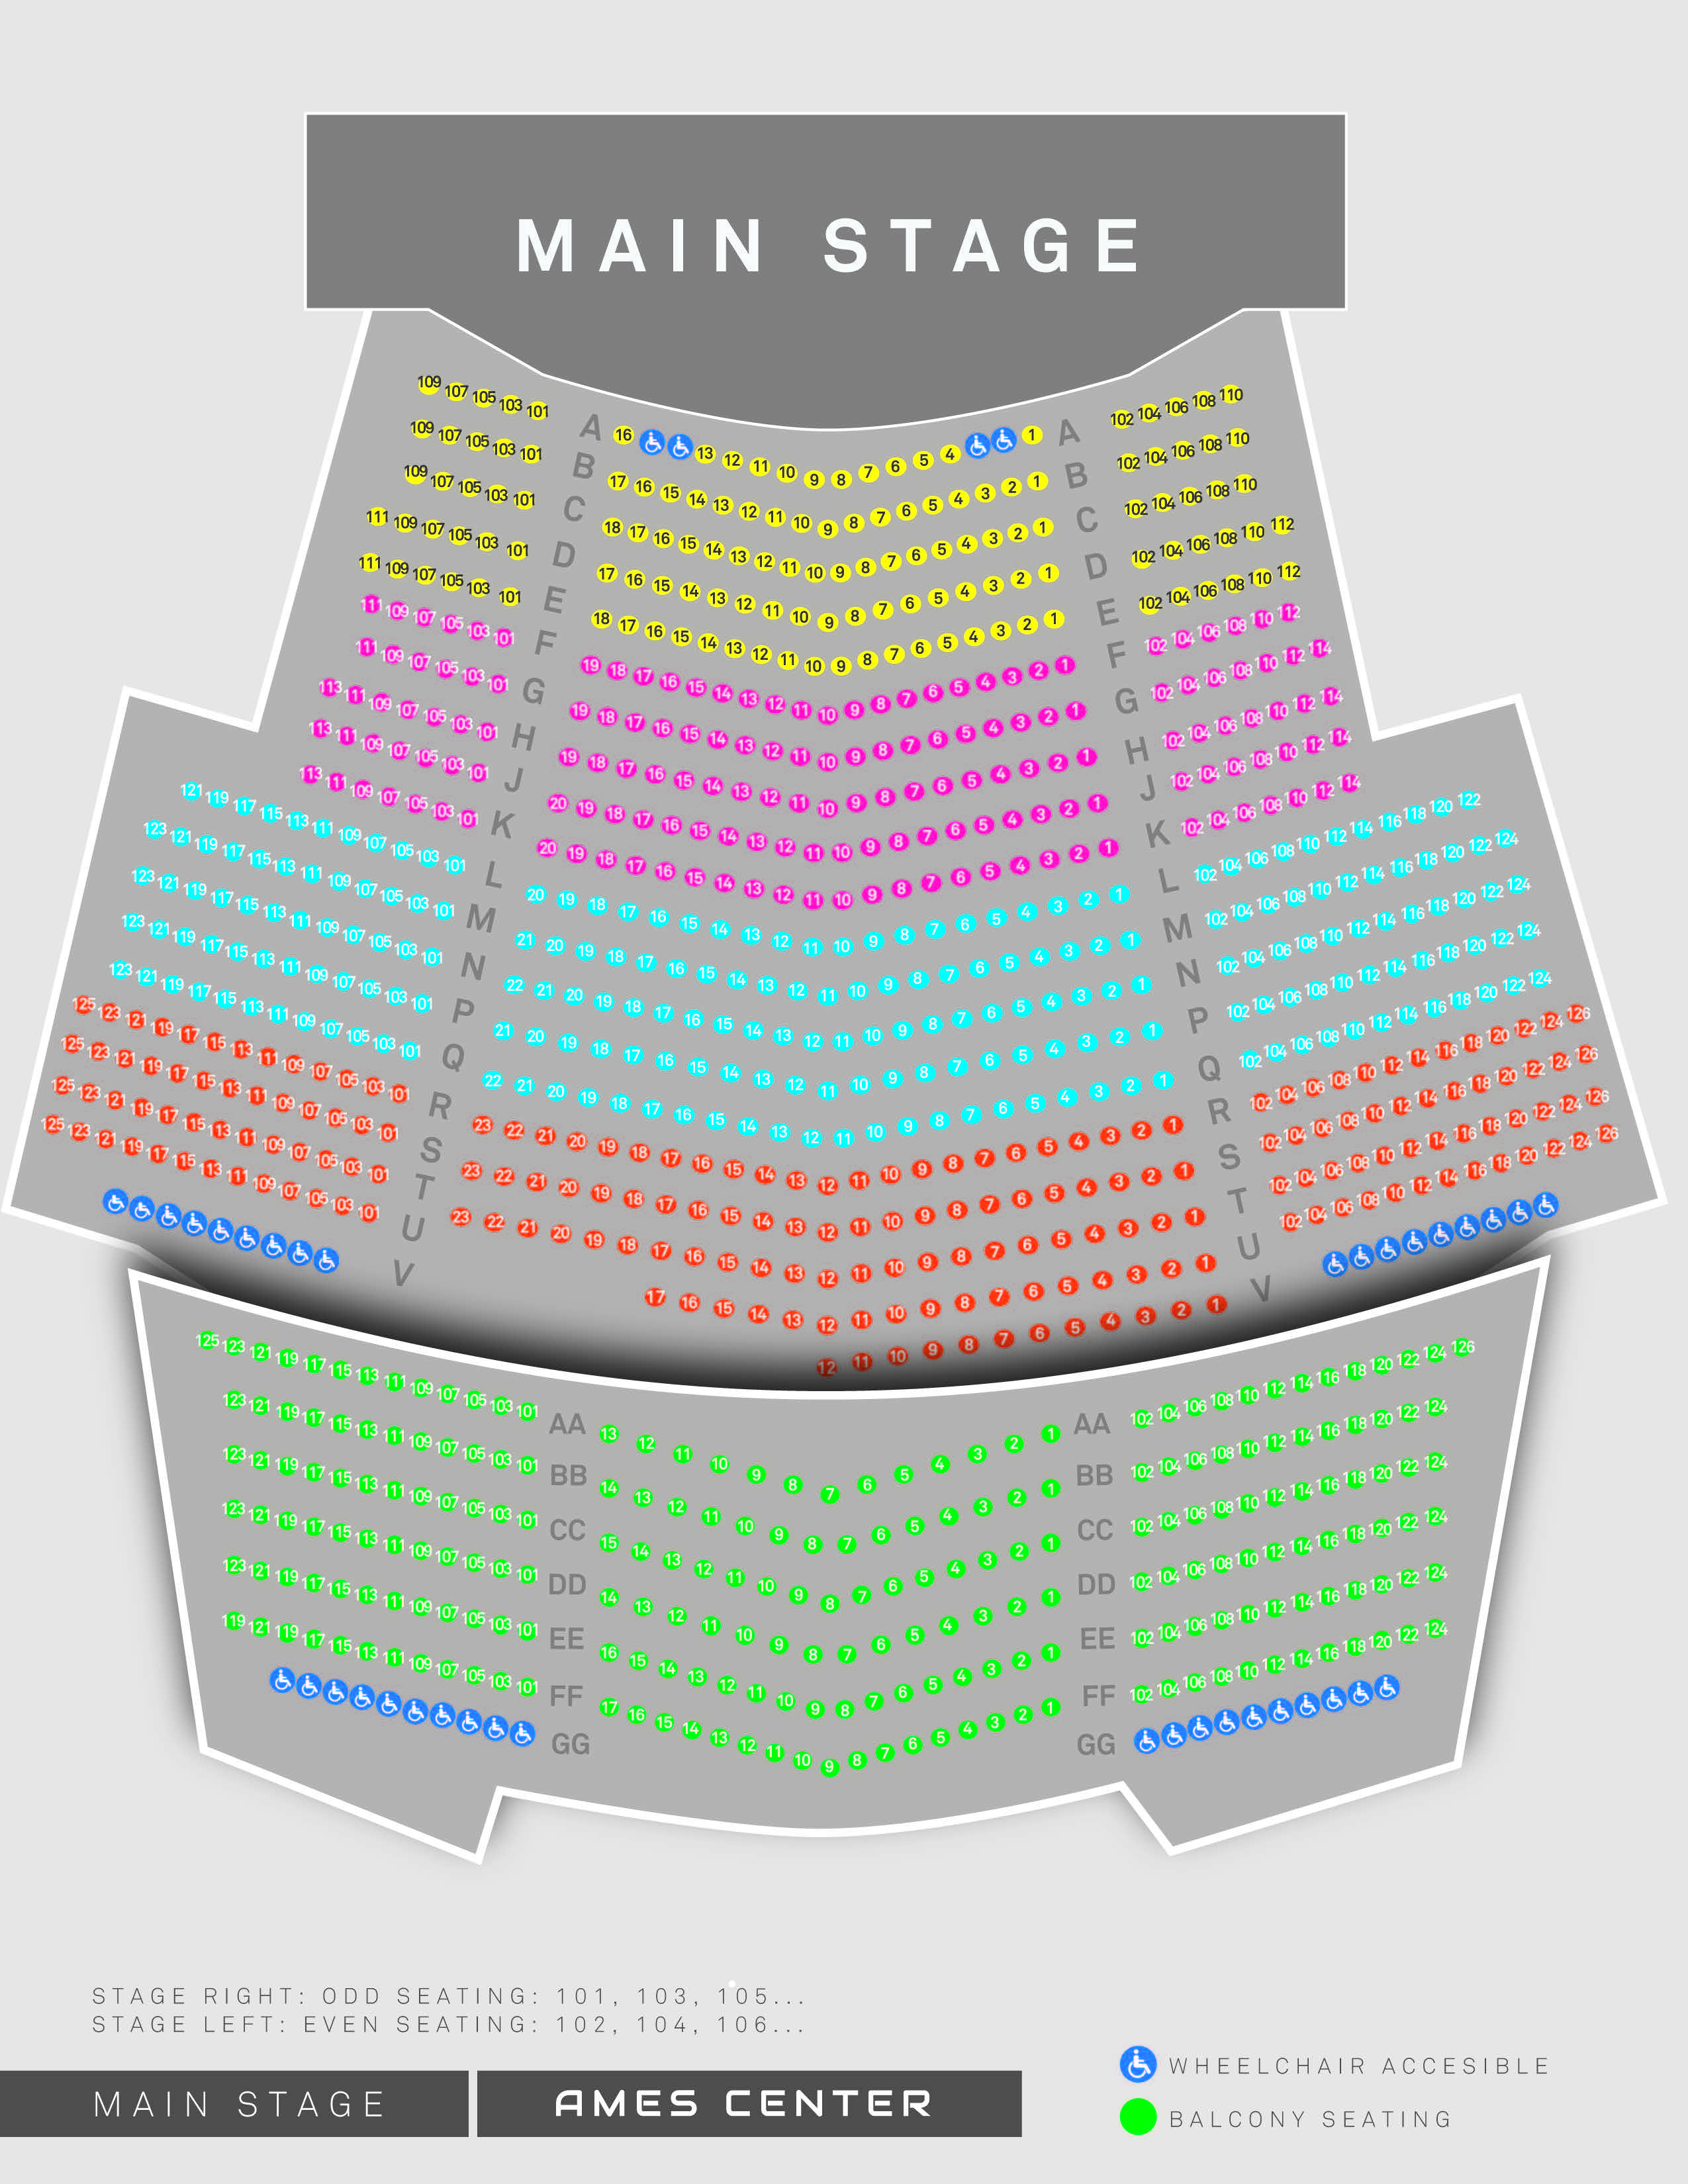 Orpheum Theater Minneapolis Mn Seating Chart